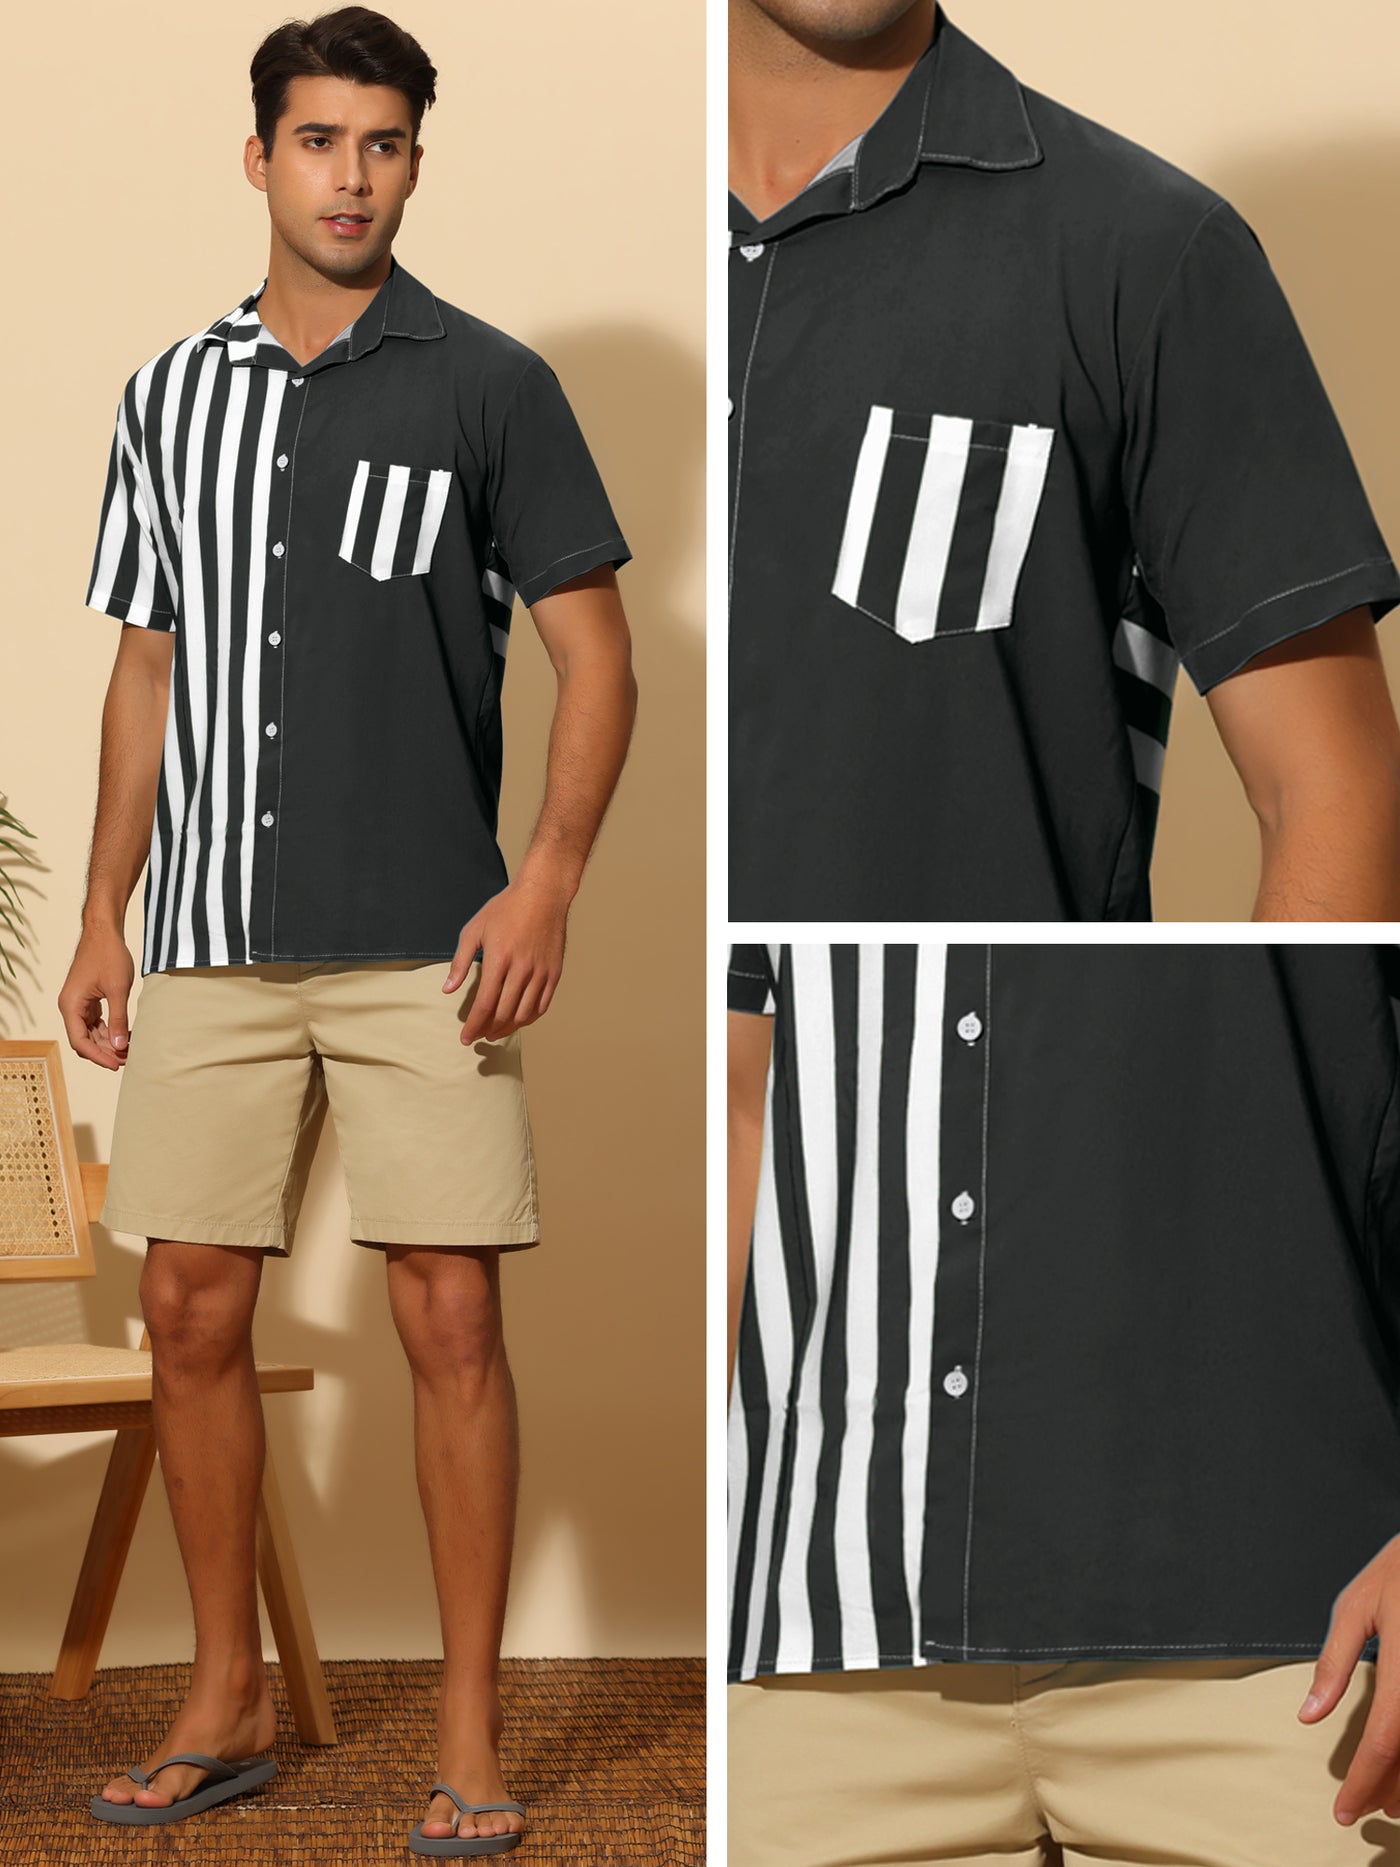 Bublédon Patchwork Striped Shirts for Men's Chest Pocket Color Block Short Sleeve Hawaiian Shirt